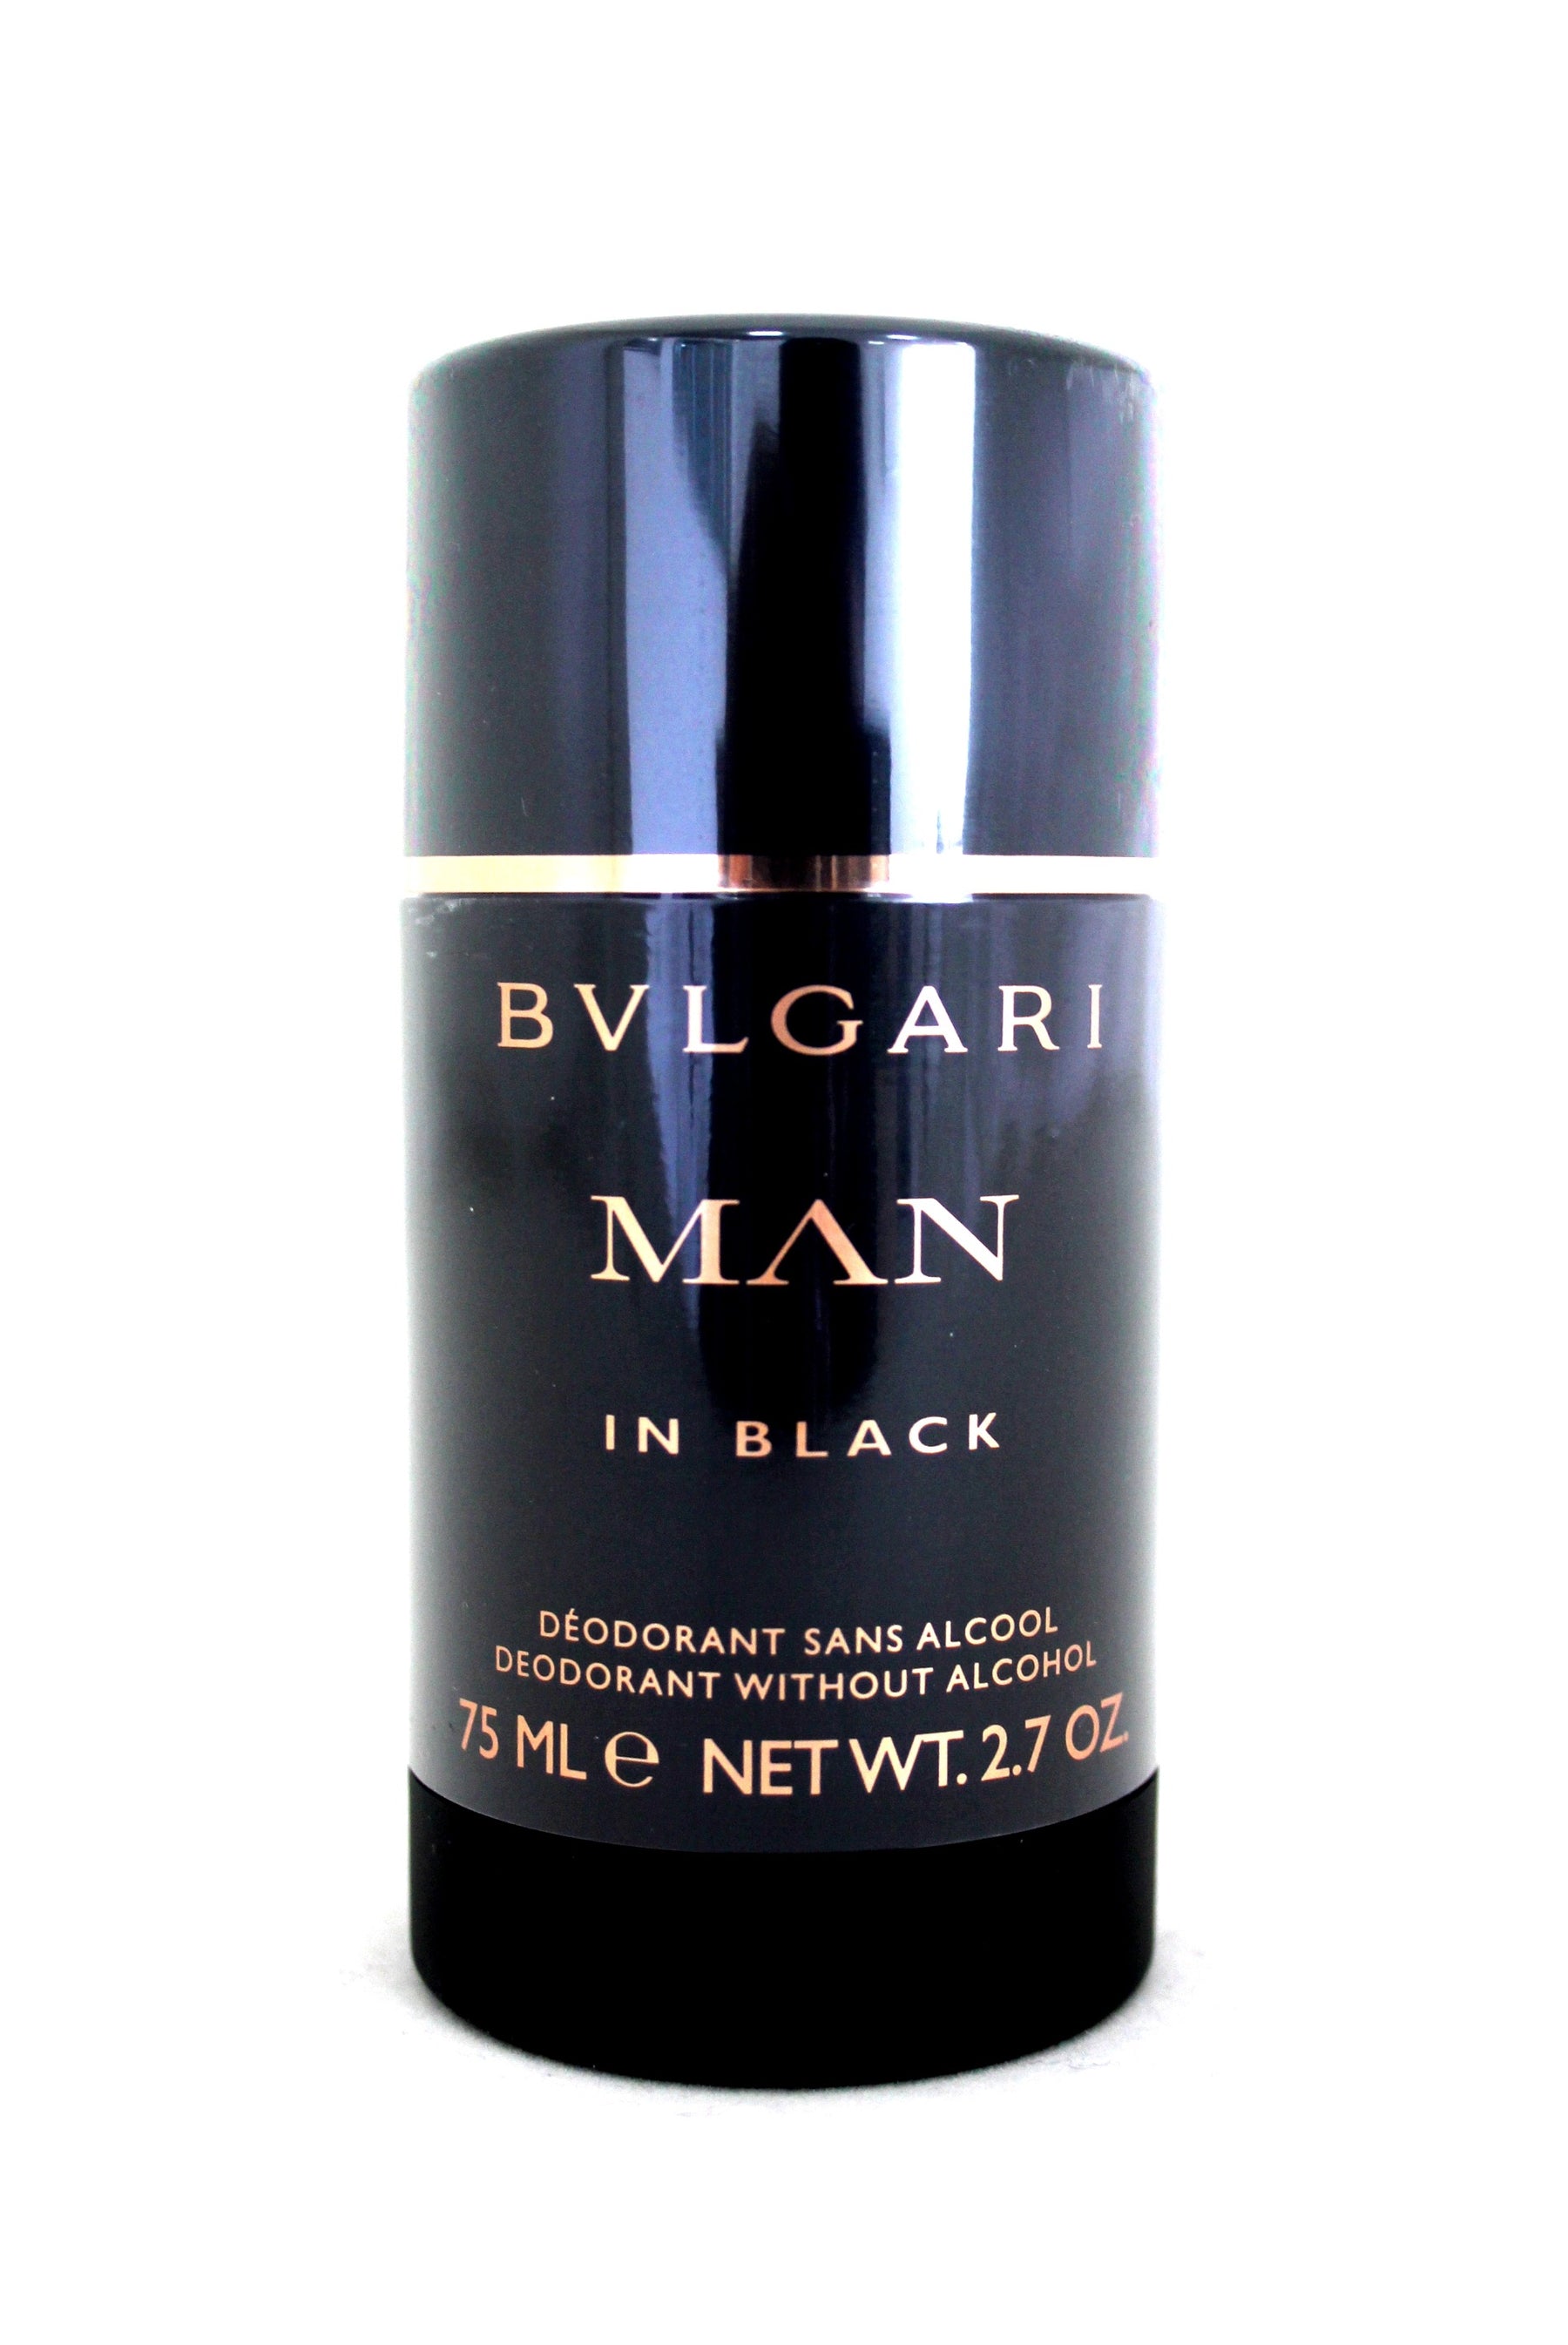 Bvlgari Man In Black Deodorant Stick 75 ml